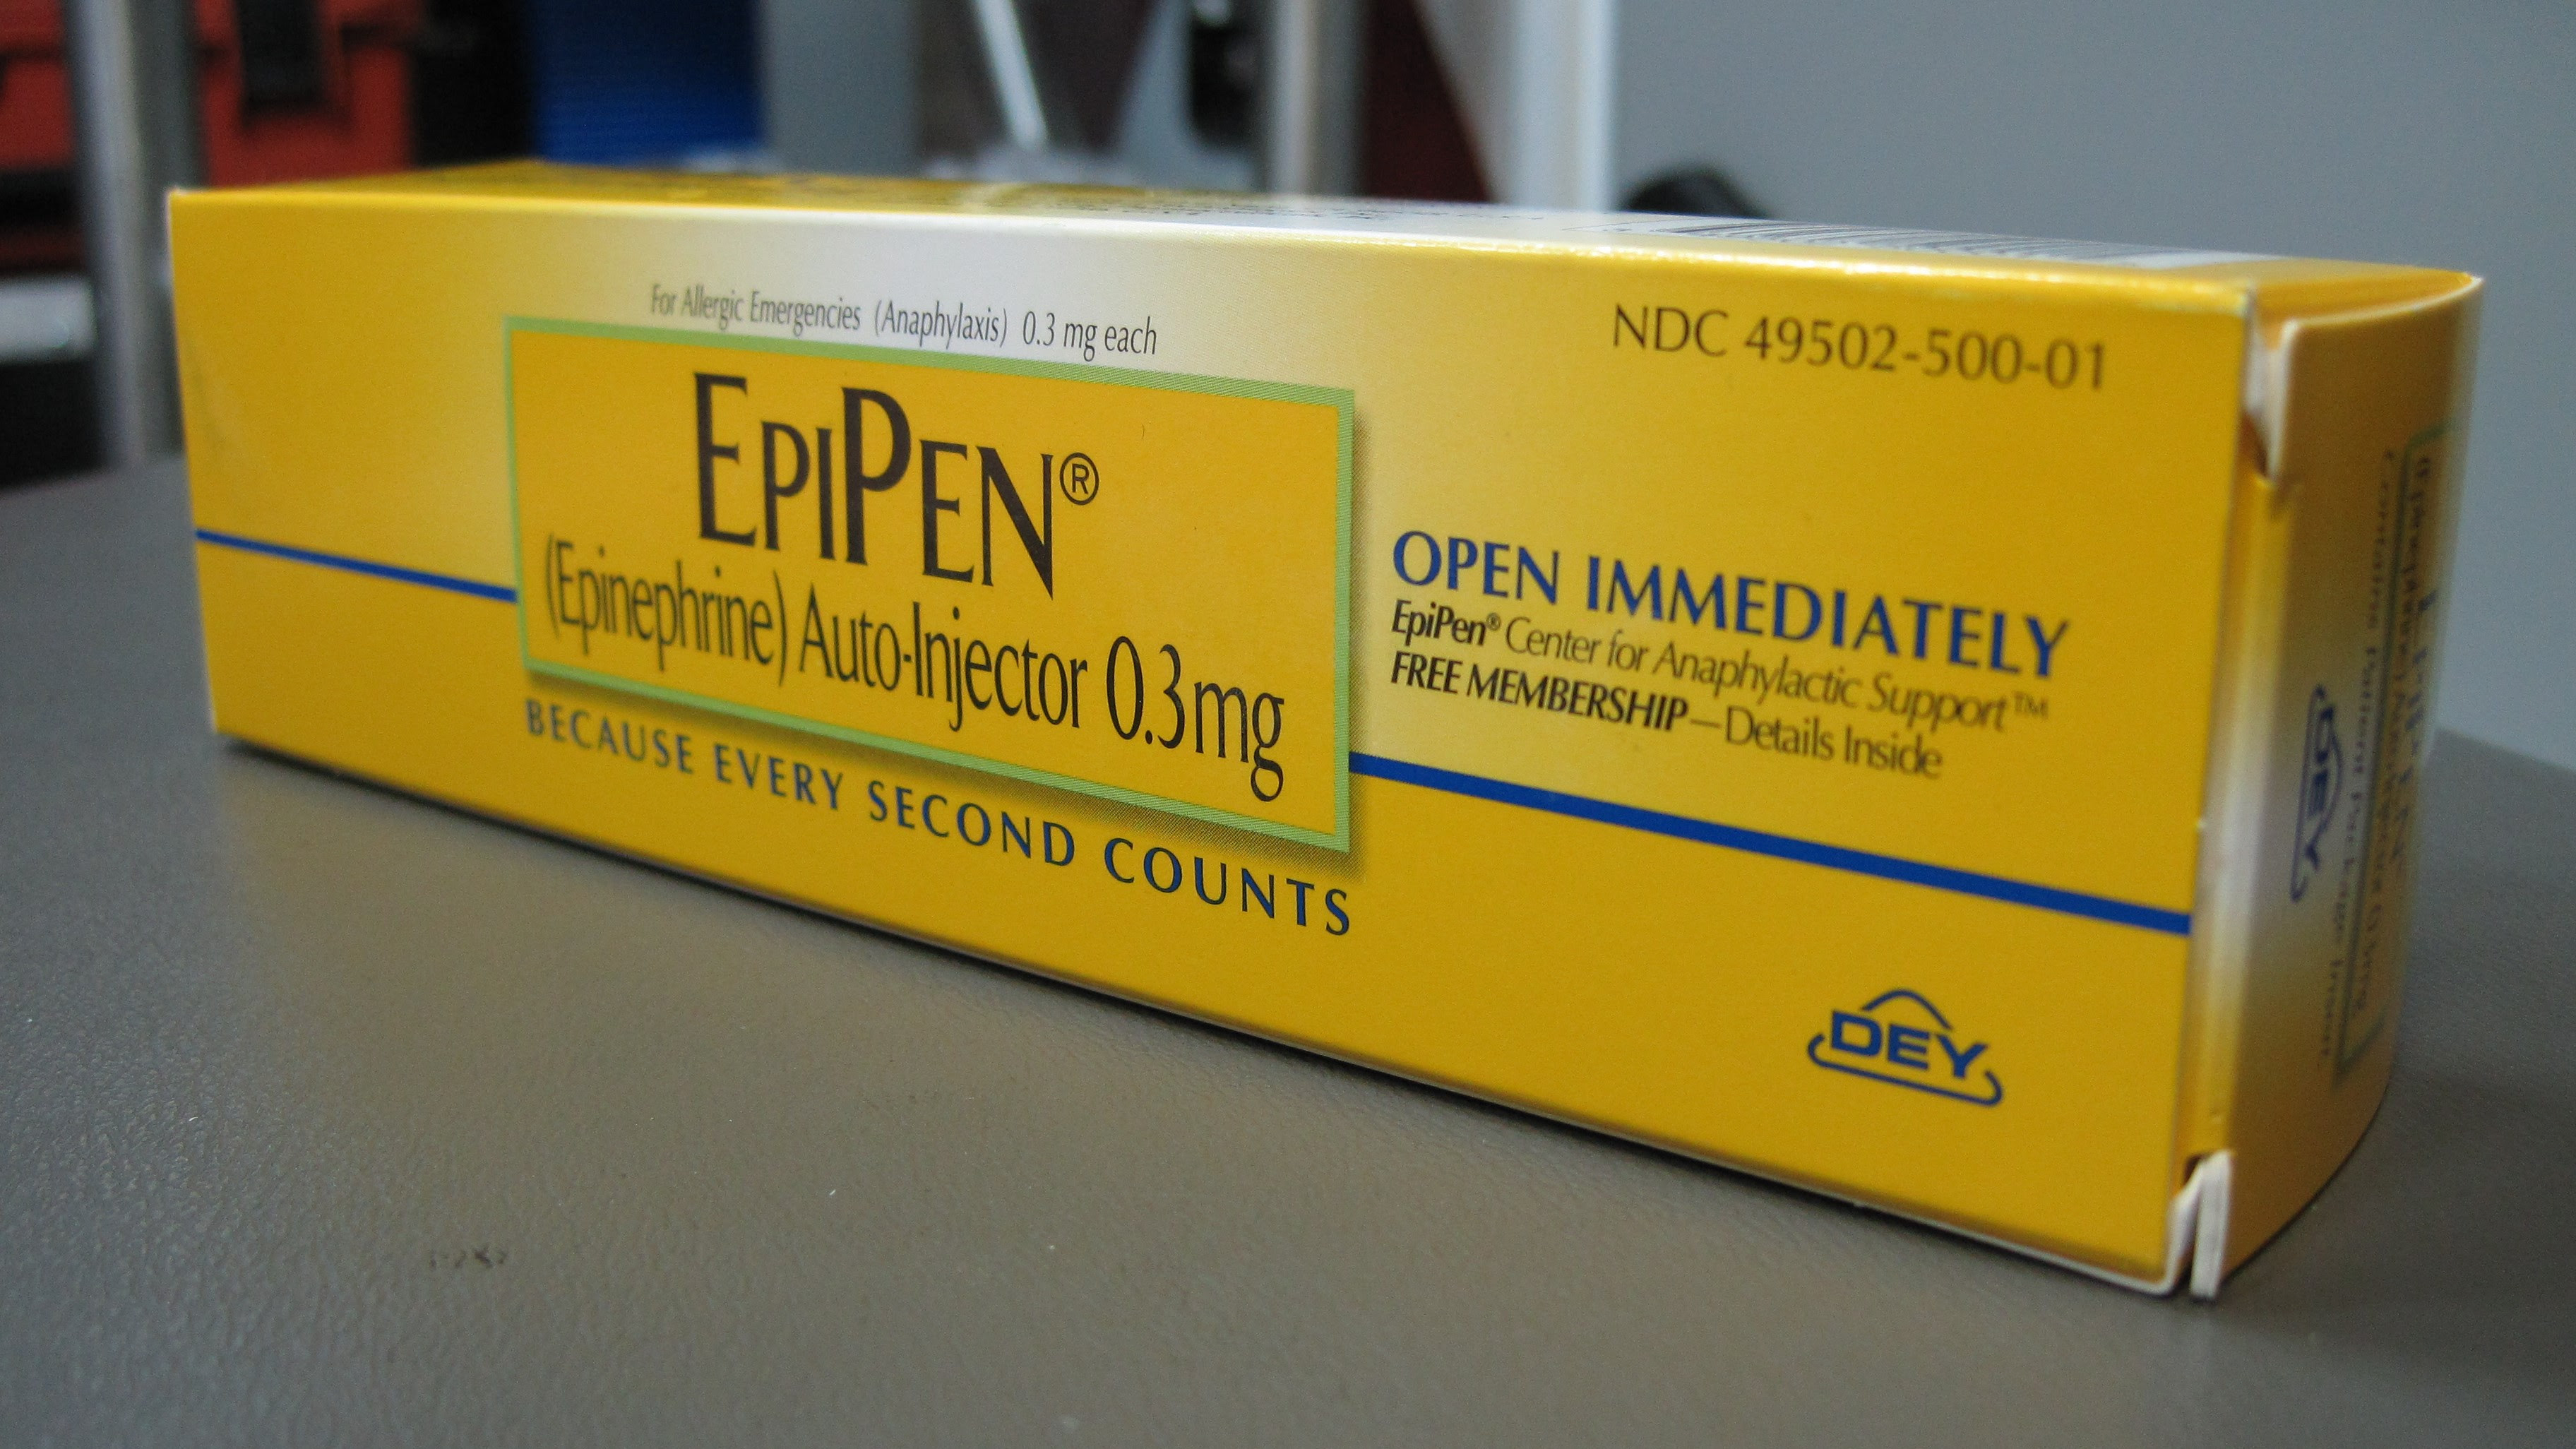 EpiPen box